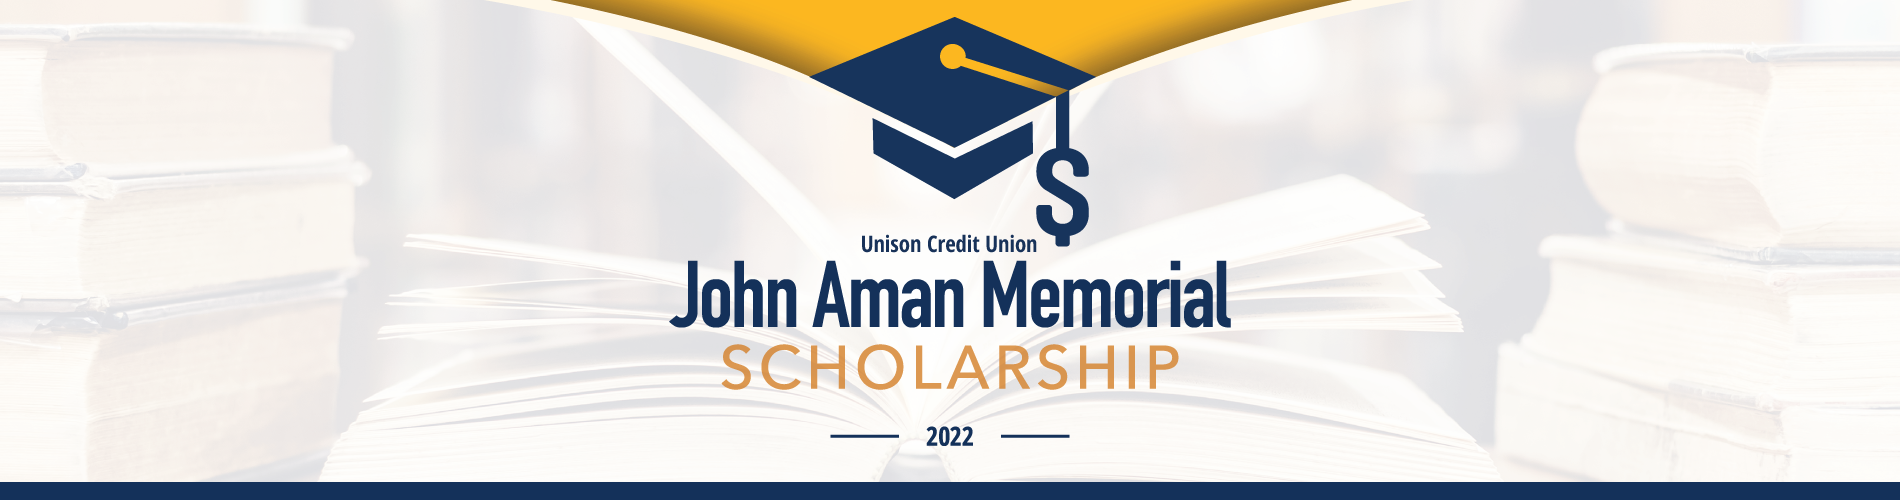 John Aman Memorial Scholarship graphic